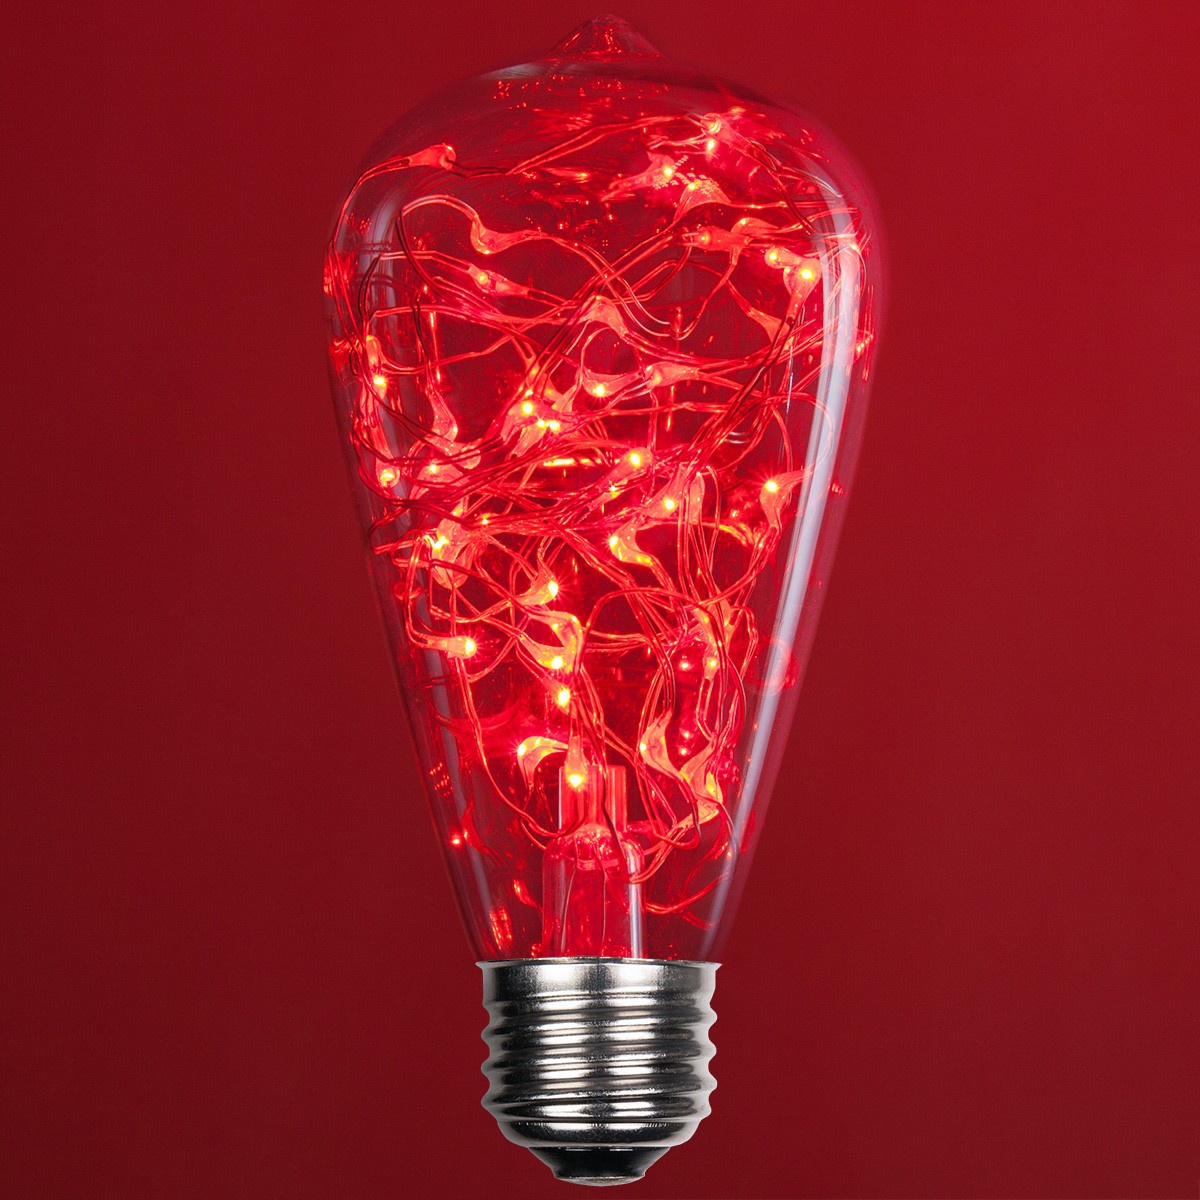 LEDimagine ST64 Fairy Light Bulb Fairy Lights, 50 Red LED Diodes Inside, Clear Glass Finish, E26 Base - image 1 of 4